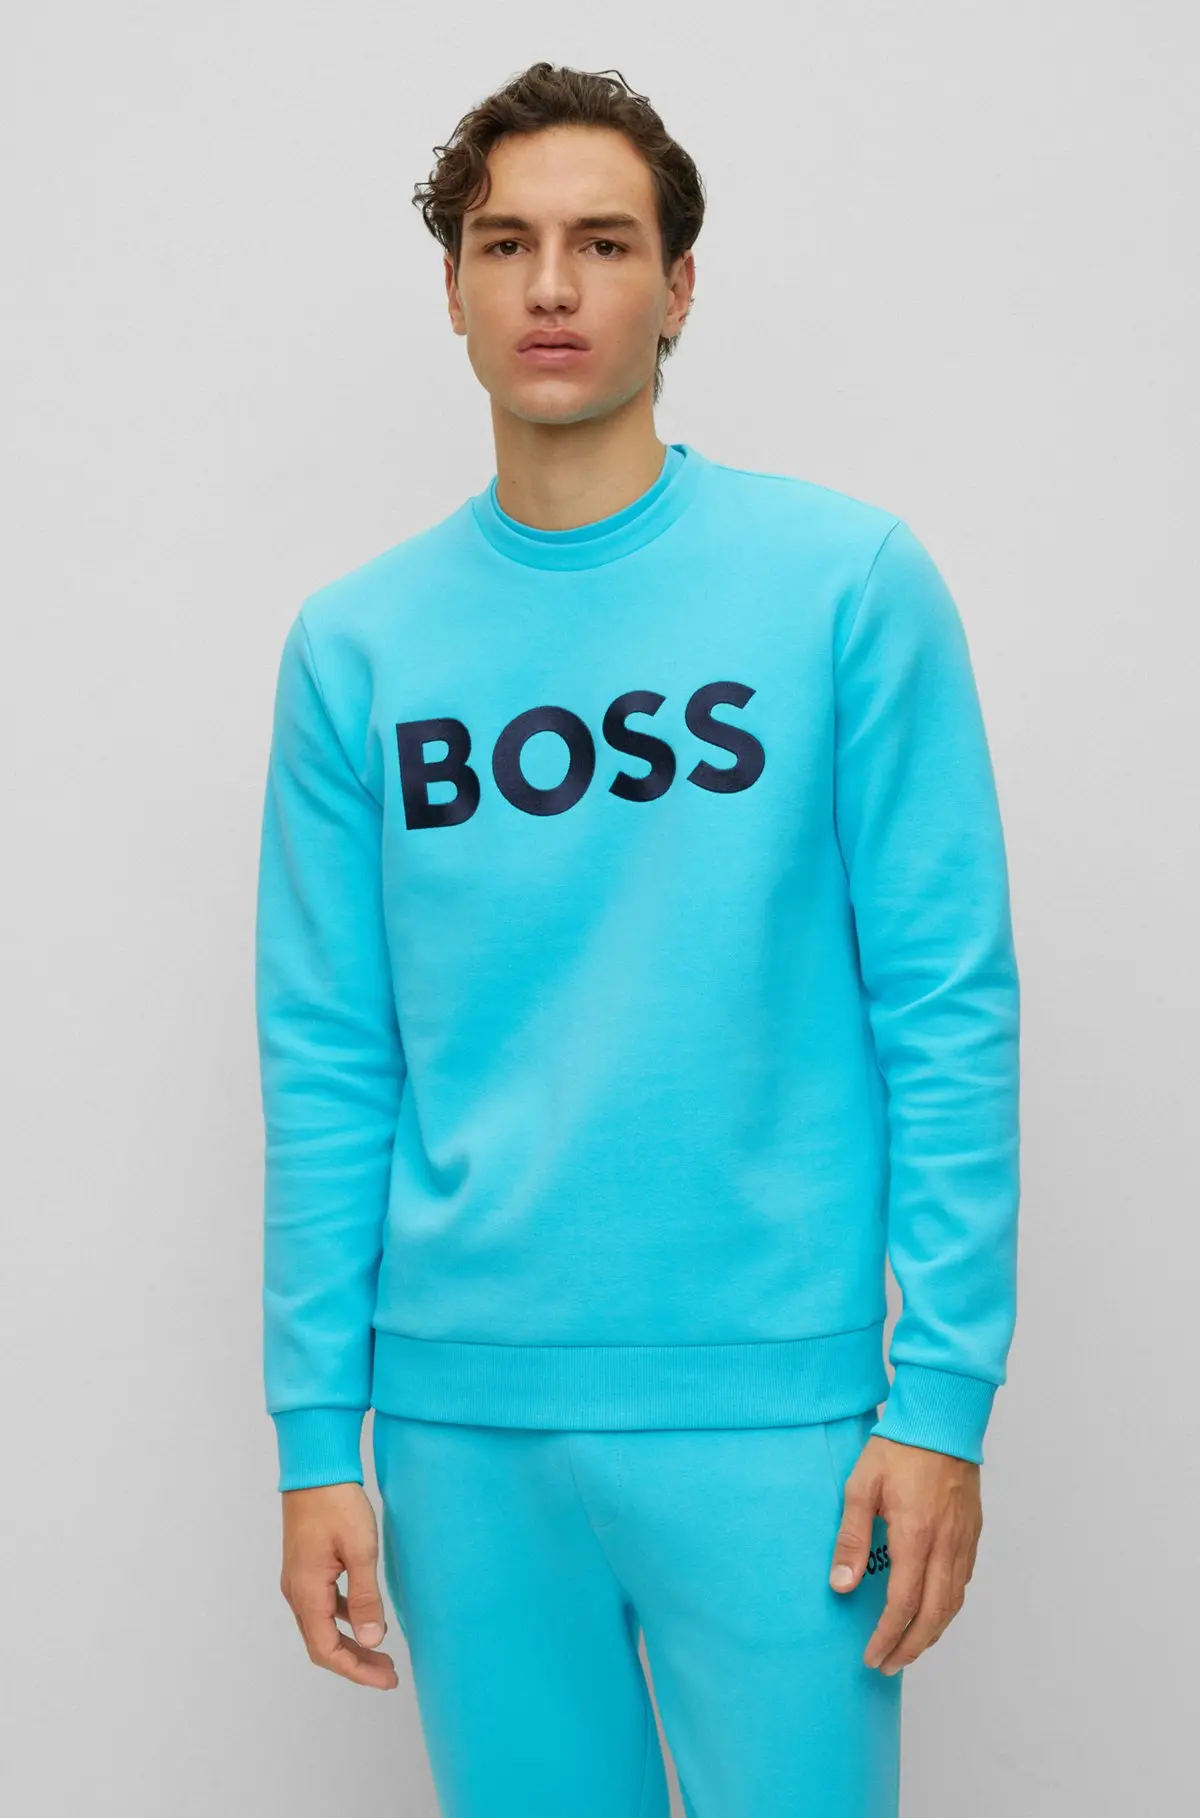 boss ropa - Que venden en Boss